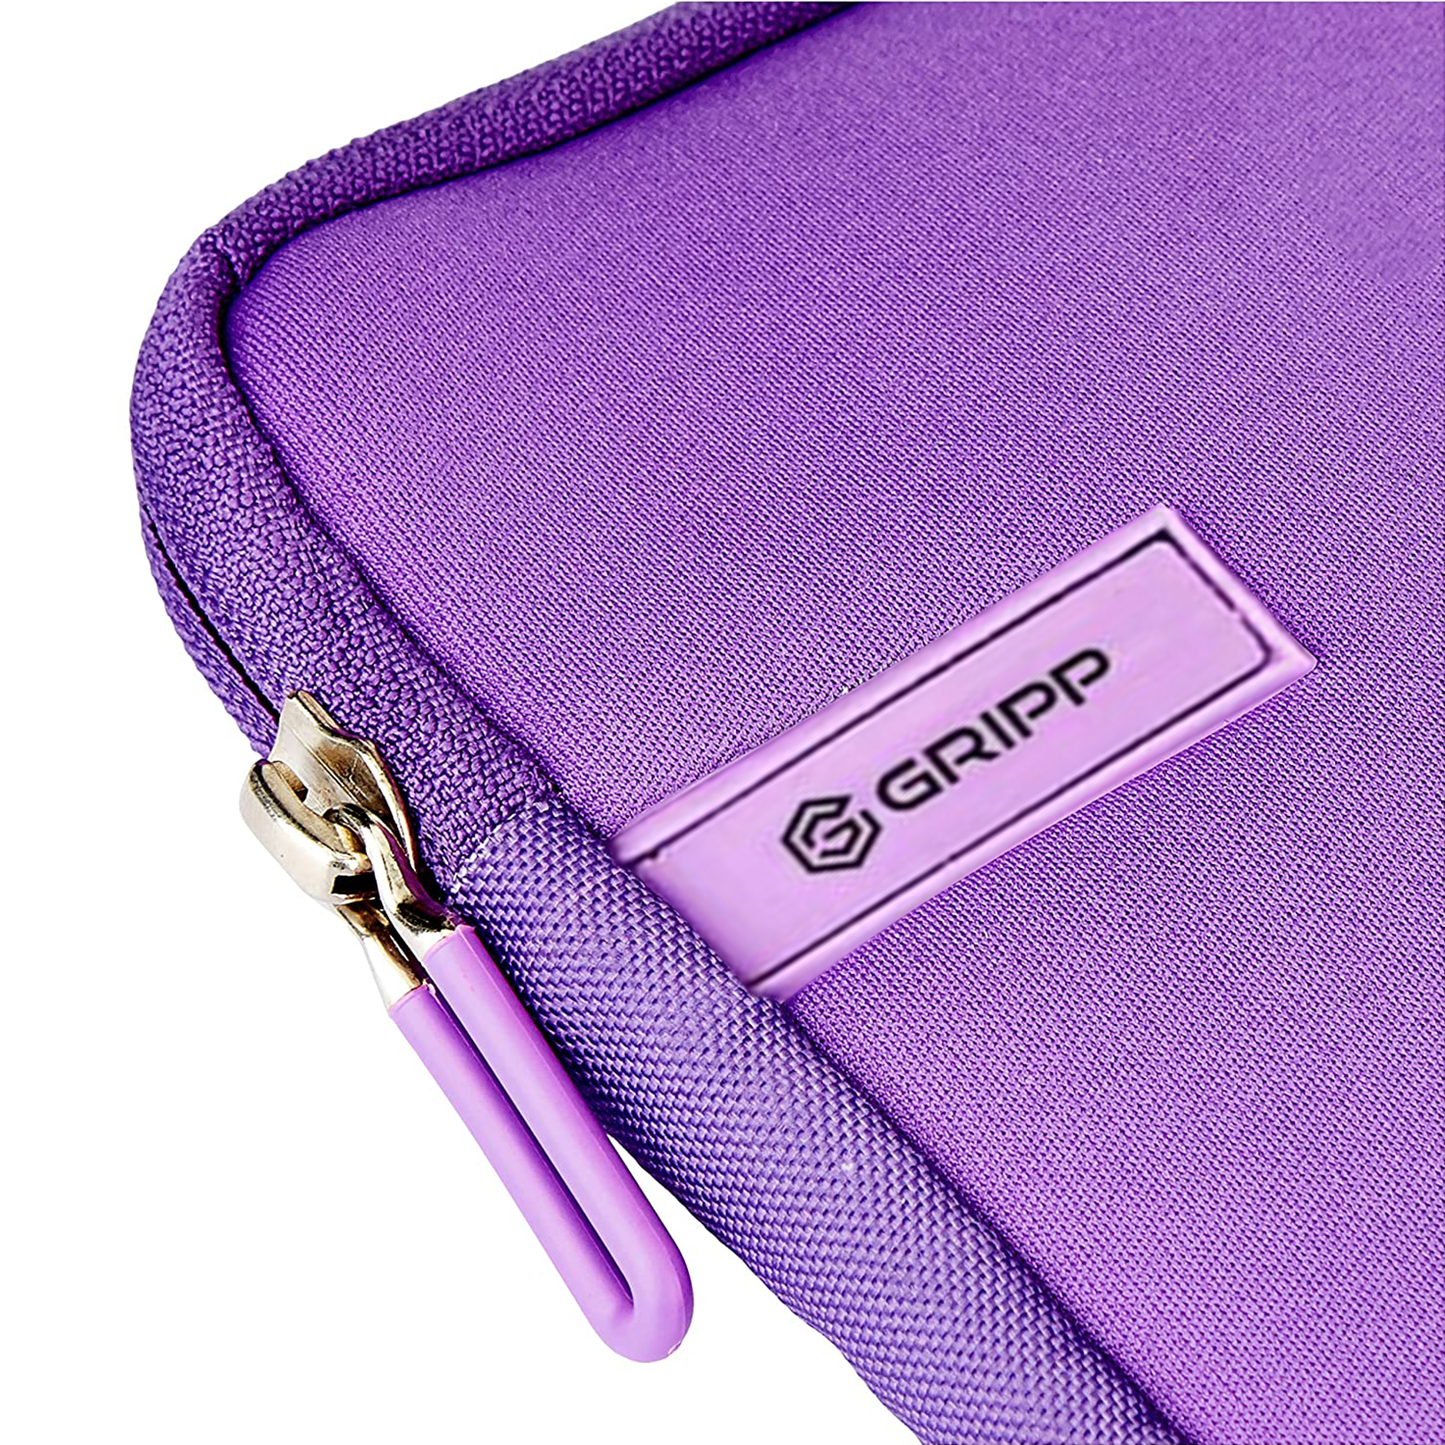 Gripp Aero Sleeve For Laptop 16" - Purple